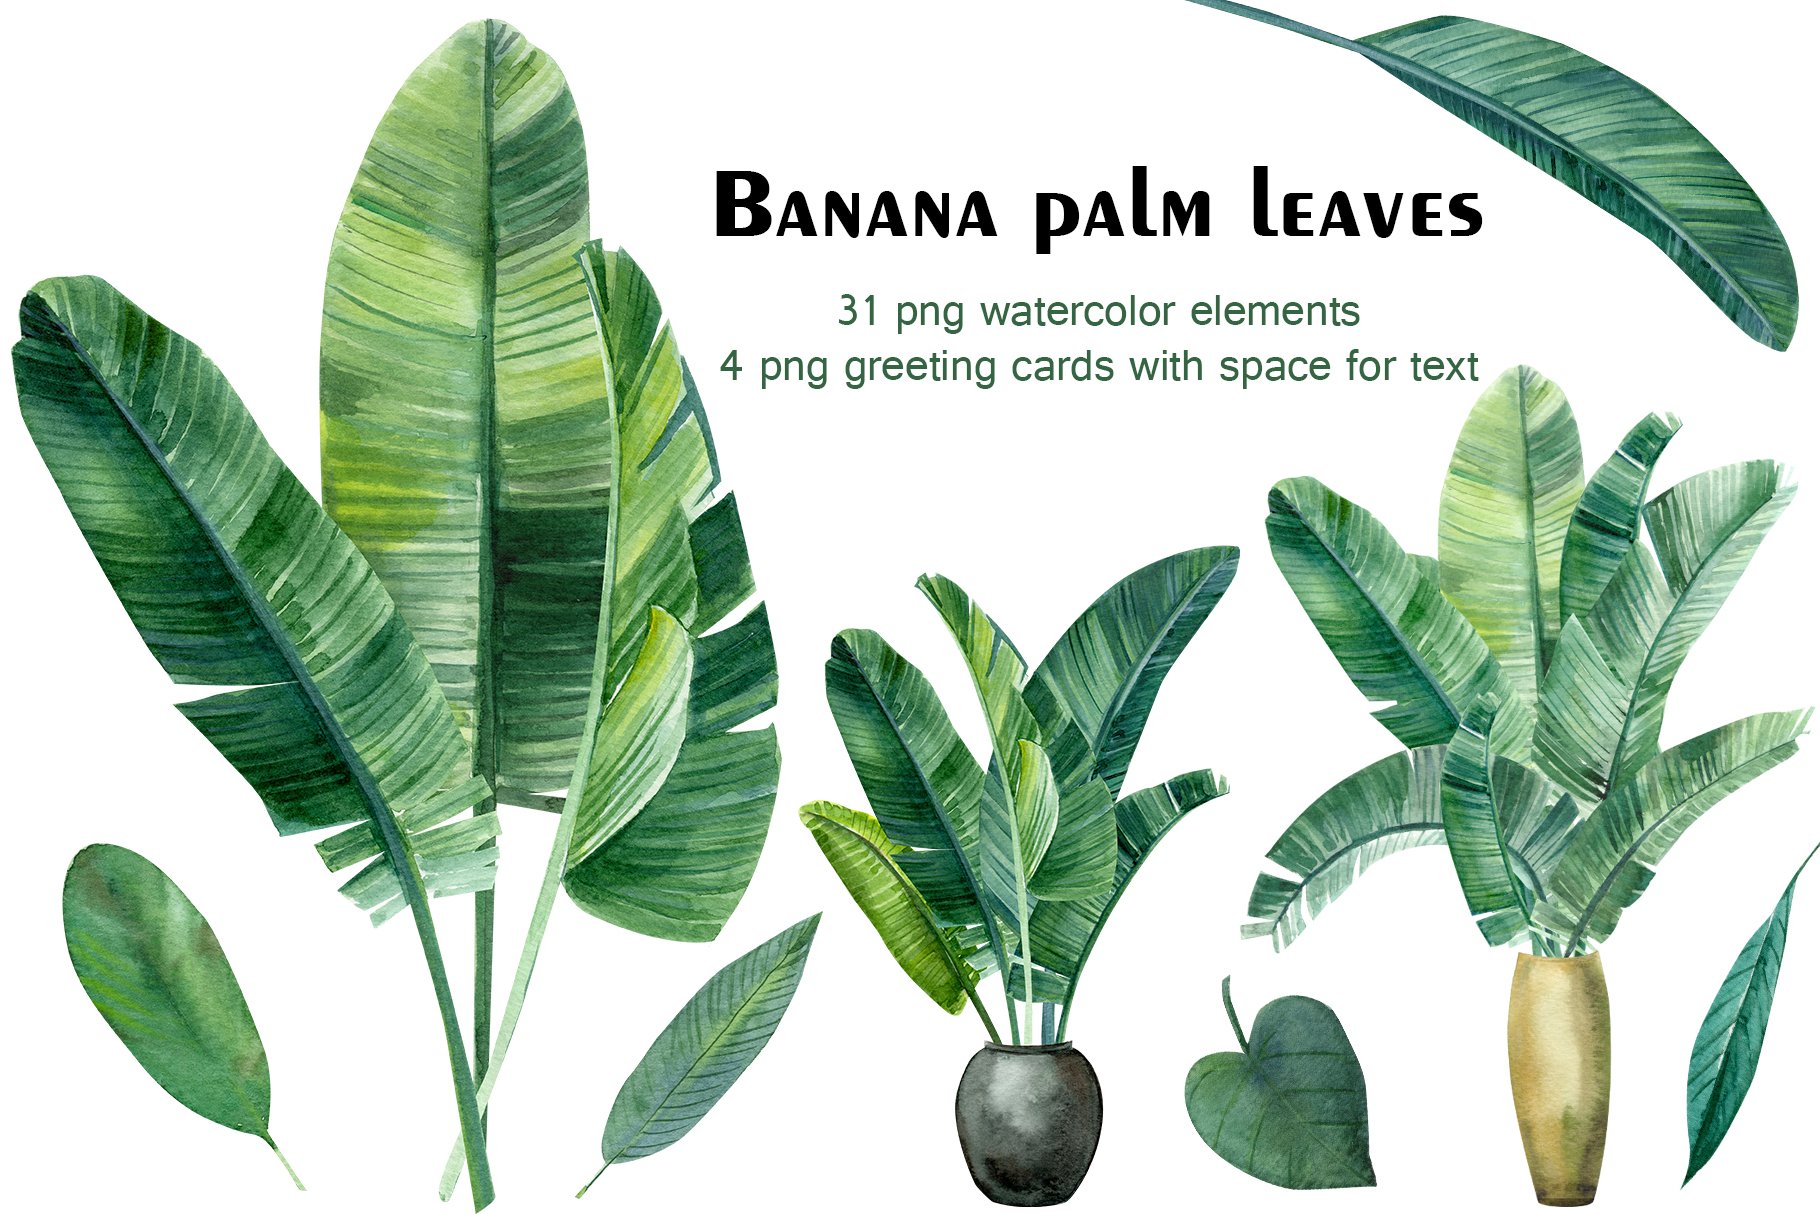 Banana palm leaves cover image.